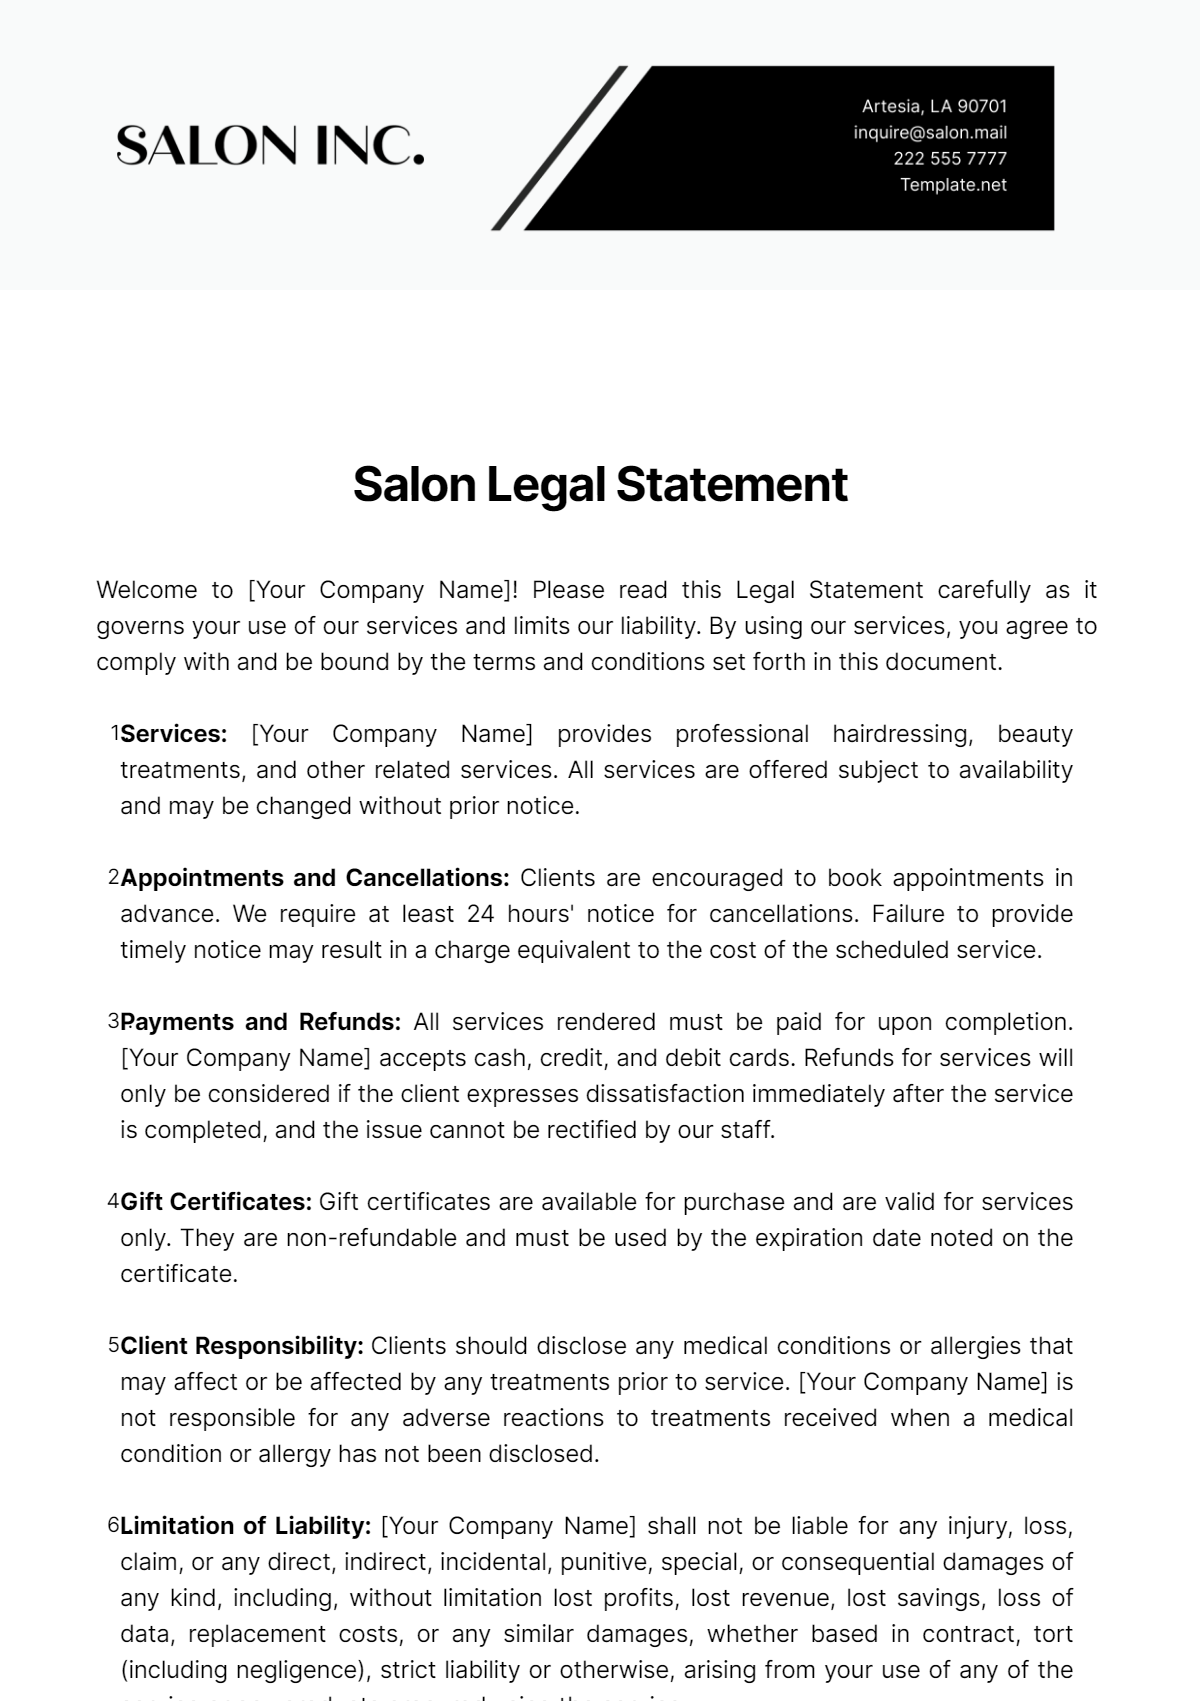 Salon Legal Statement Template